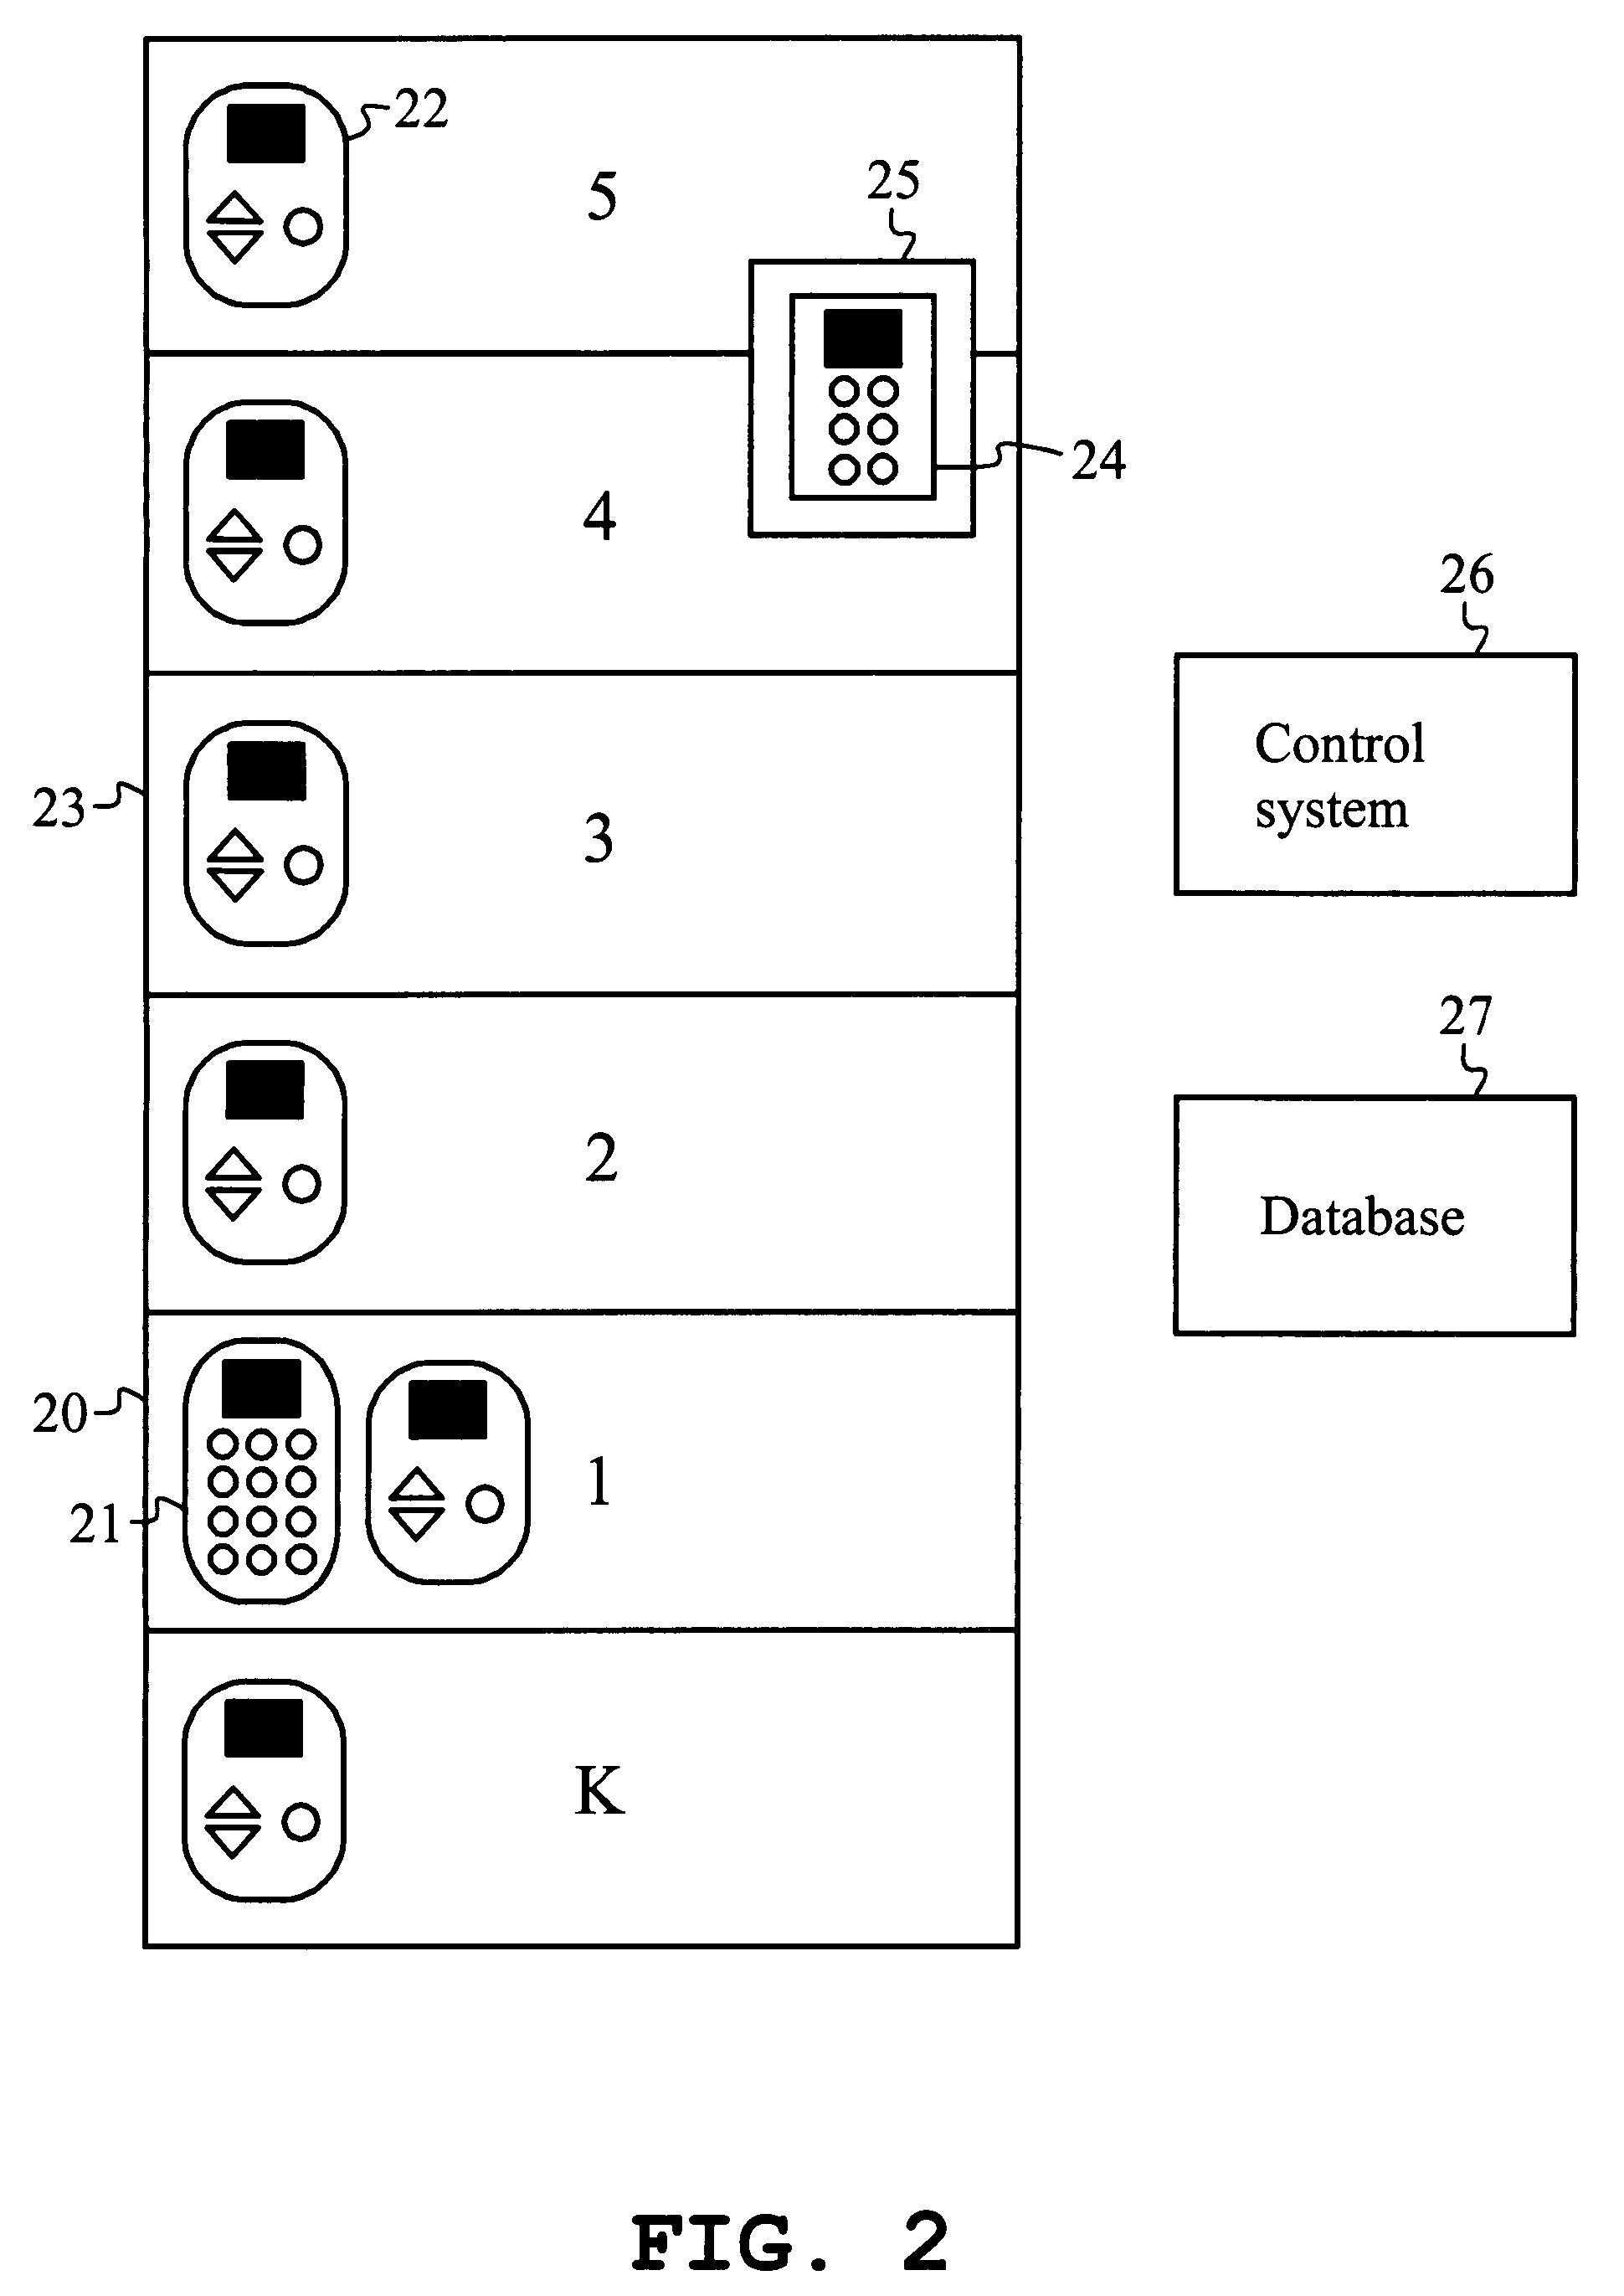 Elevator control system